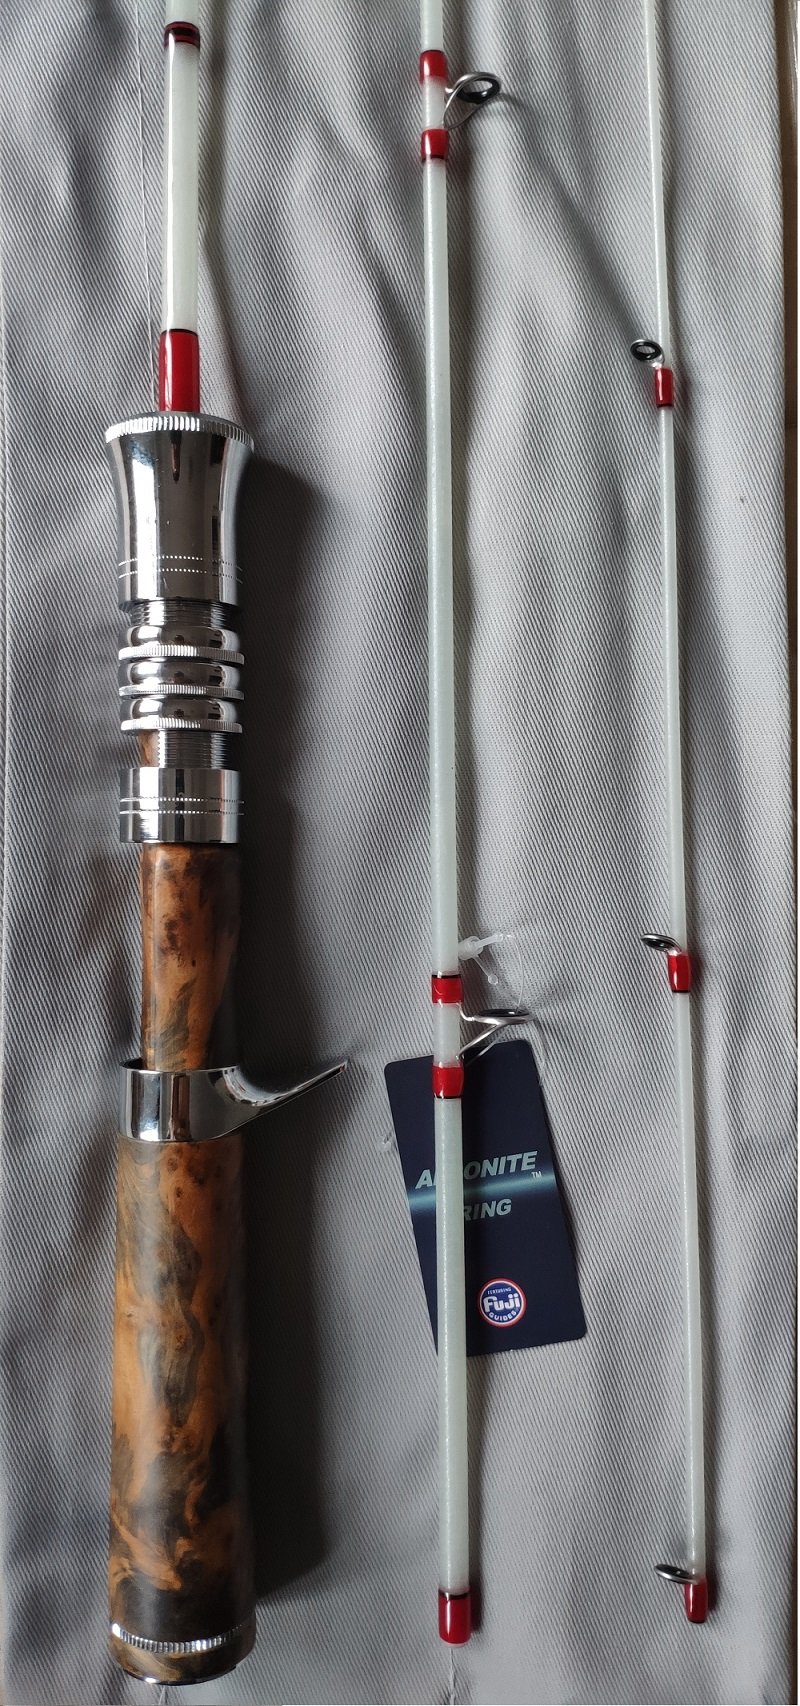 Fiberglass Fishing Rod Tackle  Fishing Rods Winter Fishing